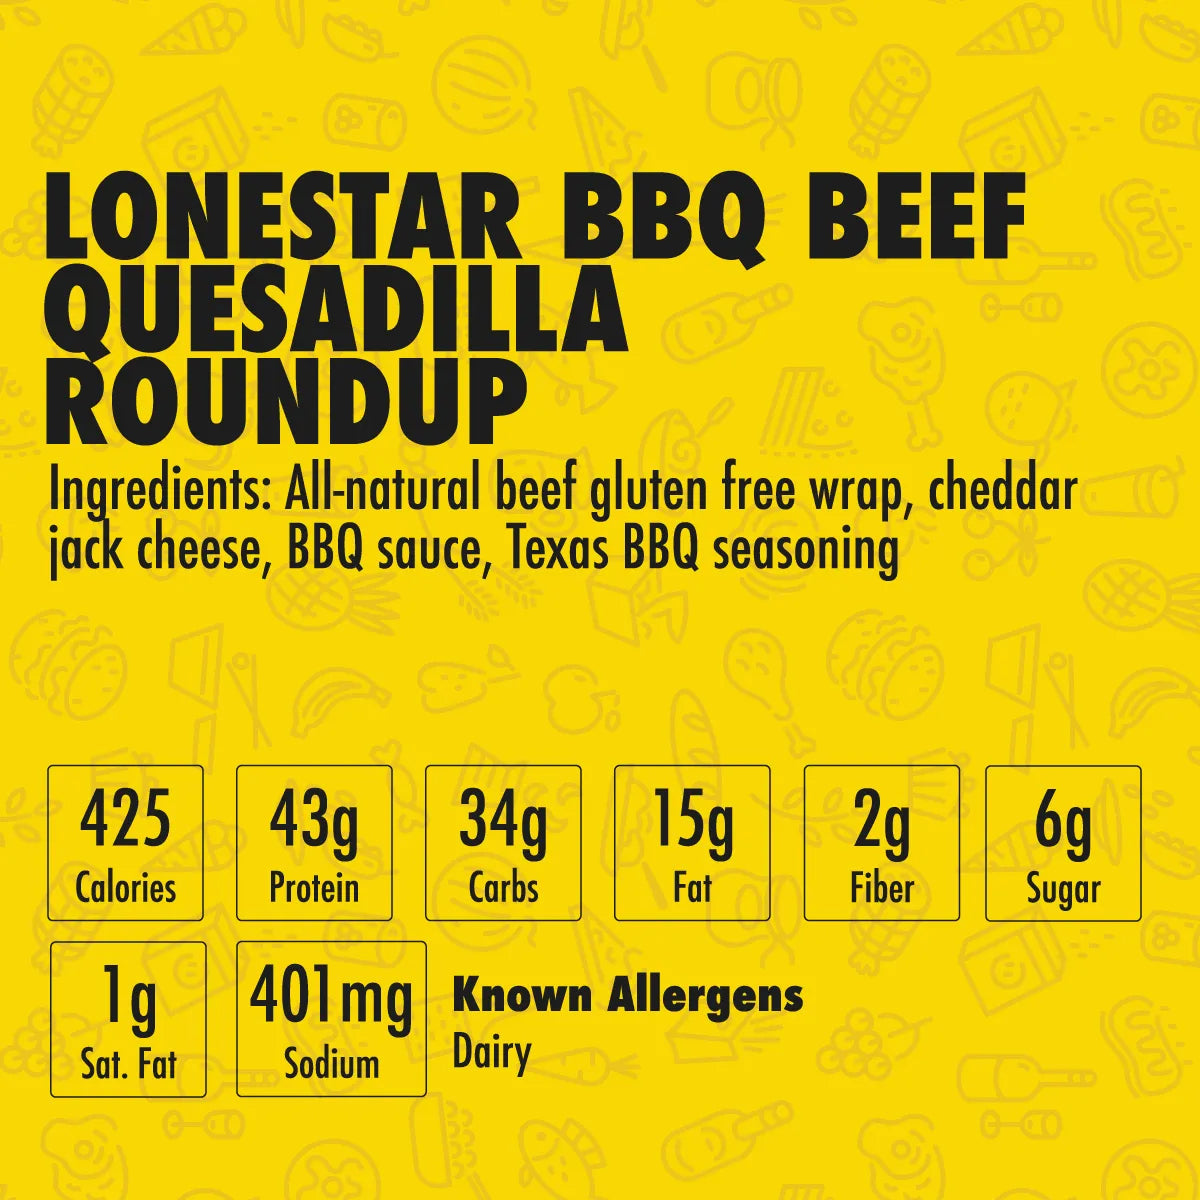 Lonestar BBQ Beef Quesadilla Roundup